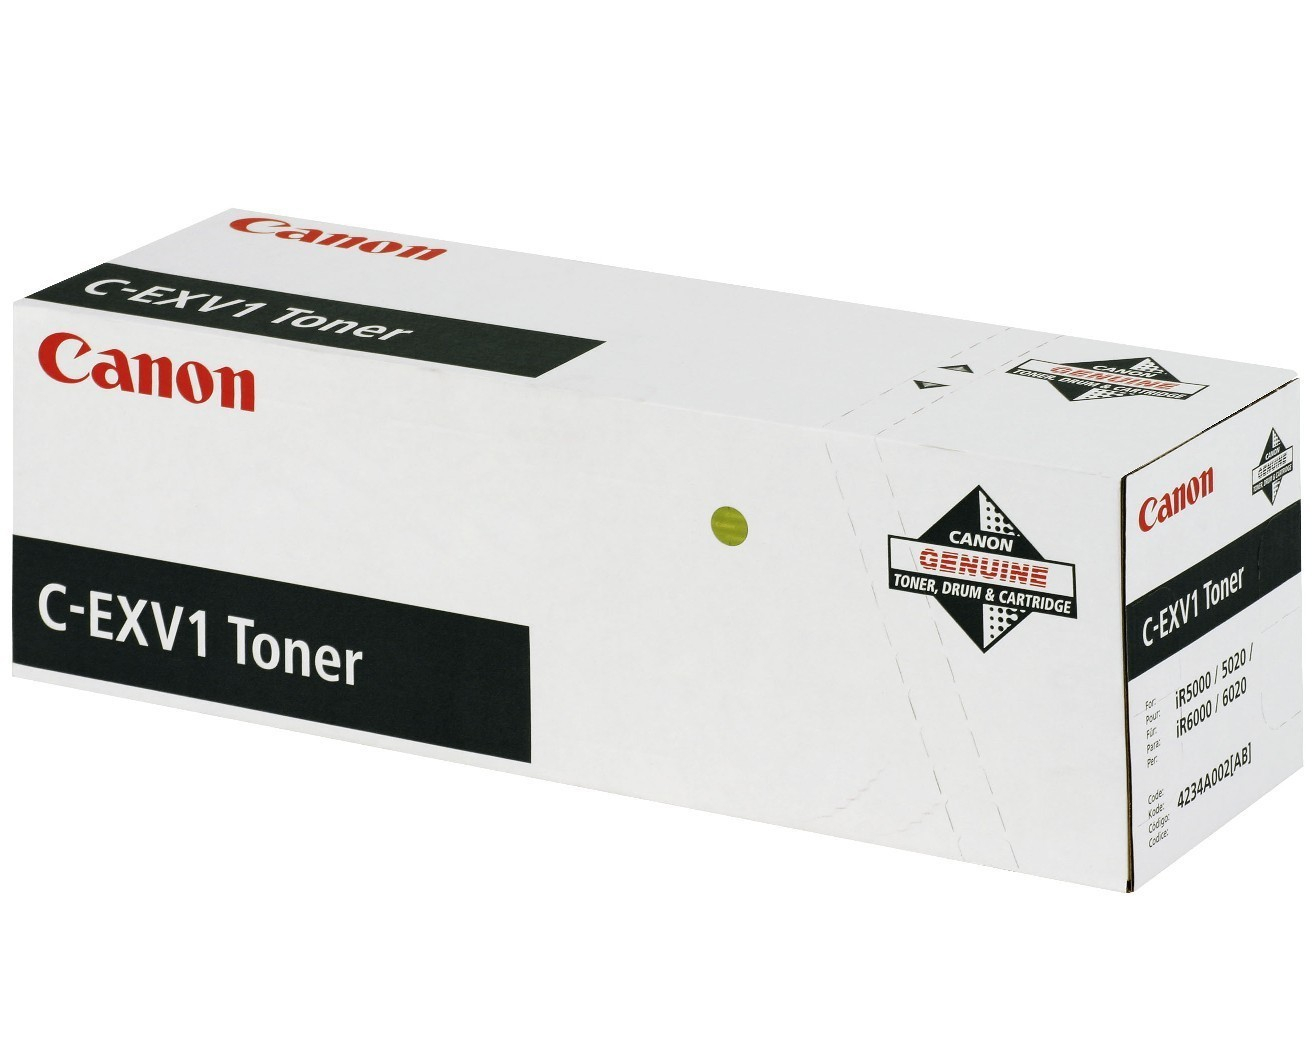 Original Toner Canon imageRUNNER 6020 i (4234A002 / C-EXV1) Schwarz